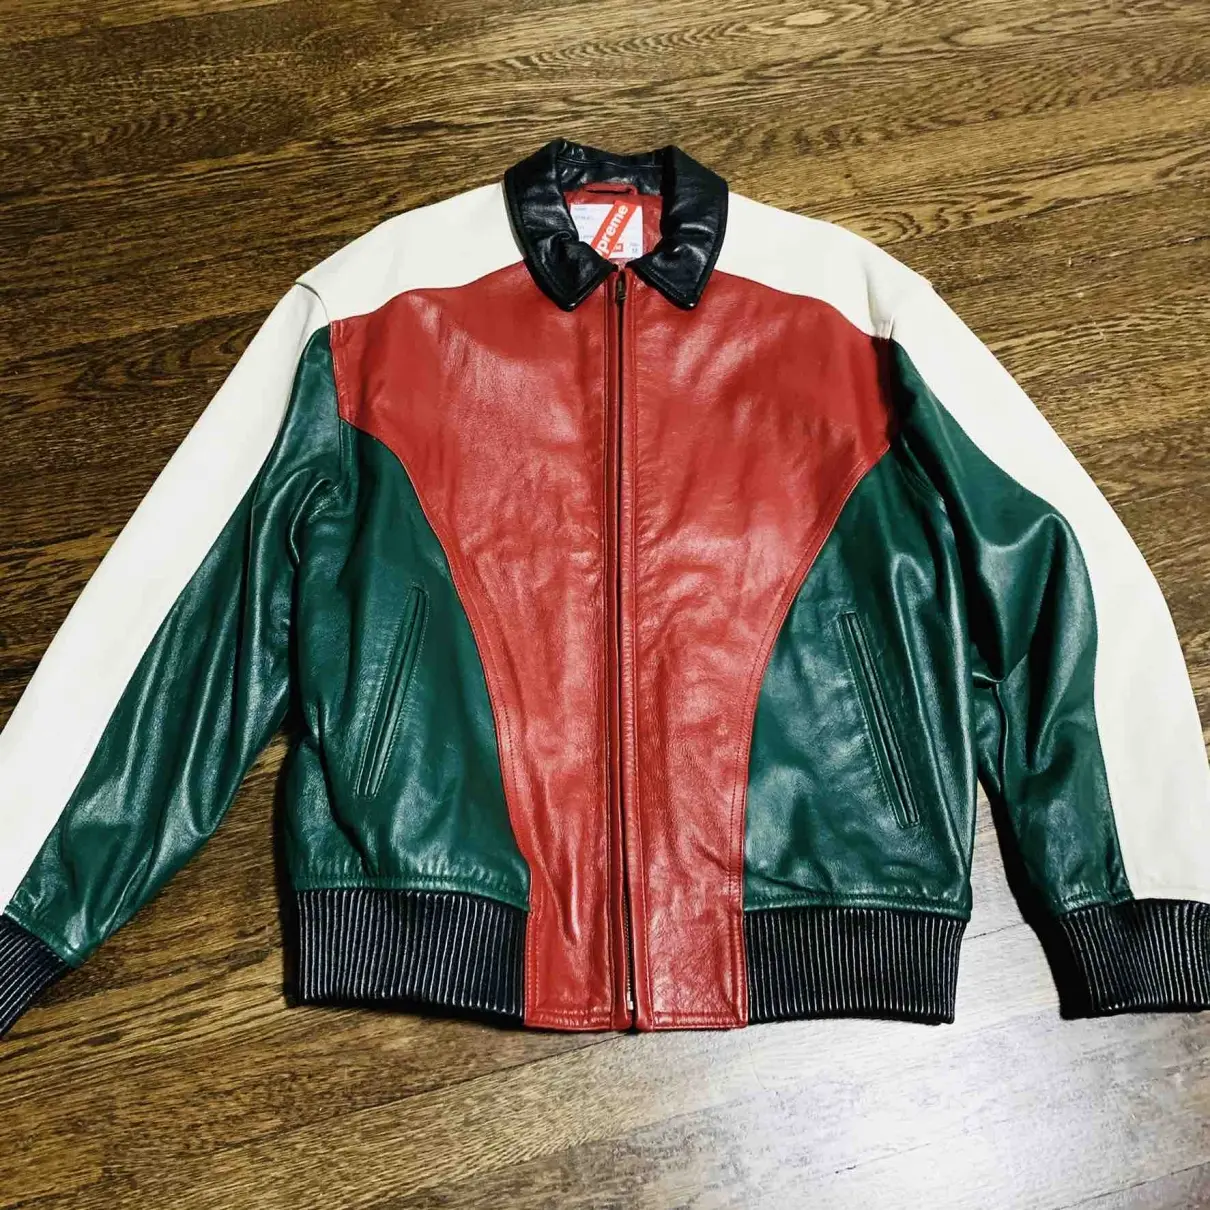 Buy Supreme Leather jacket online